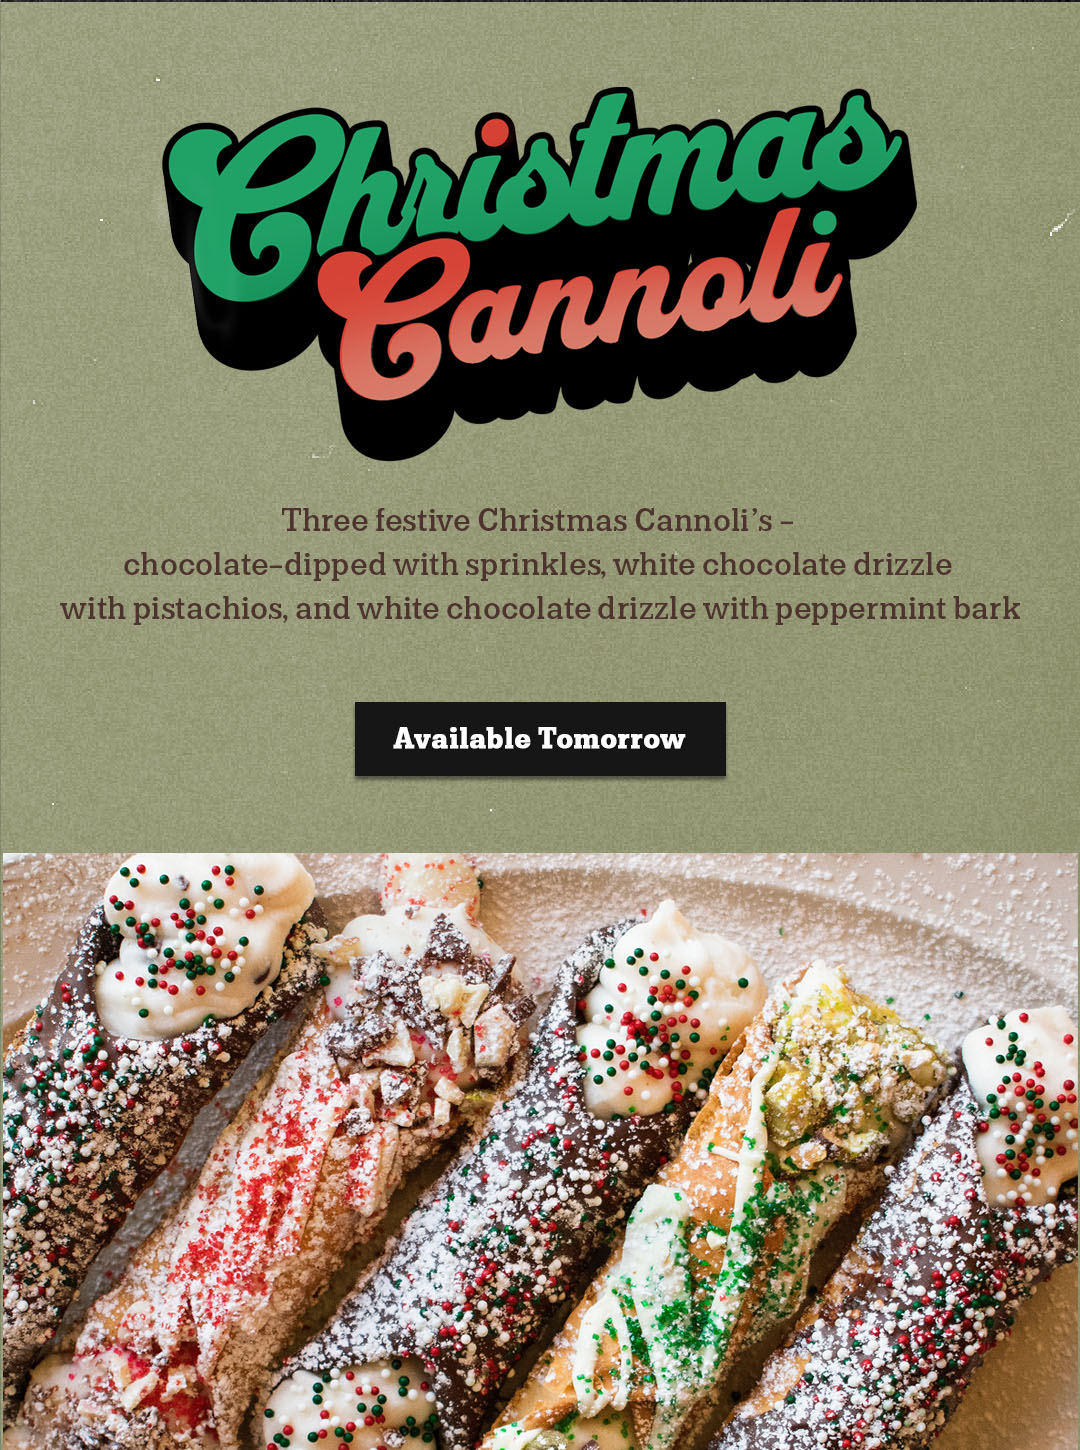 MOBILE Christmas Cannoli Available Tomorrow